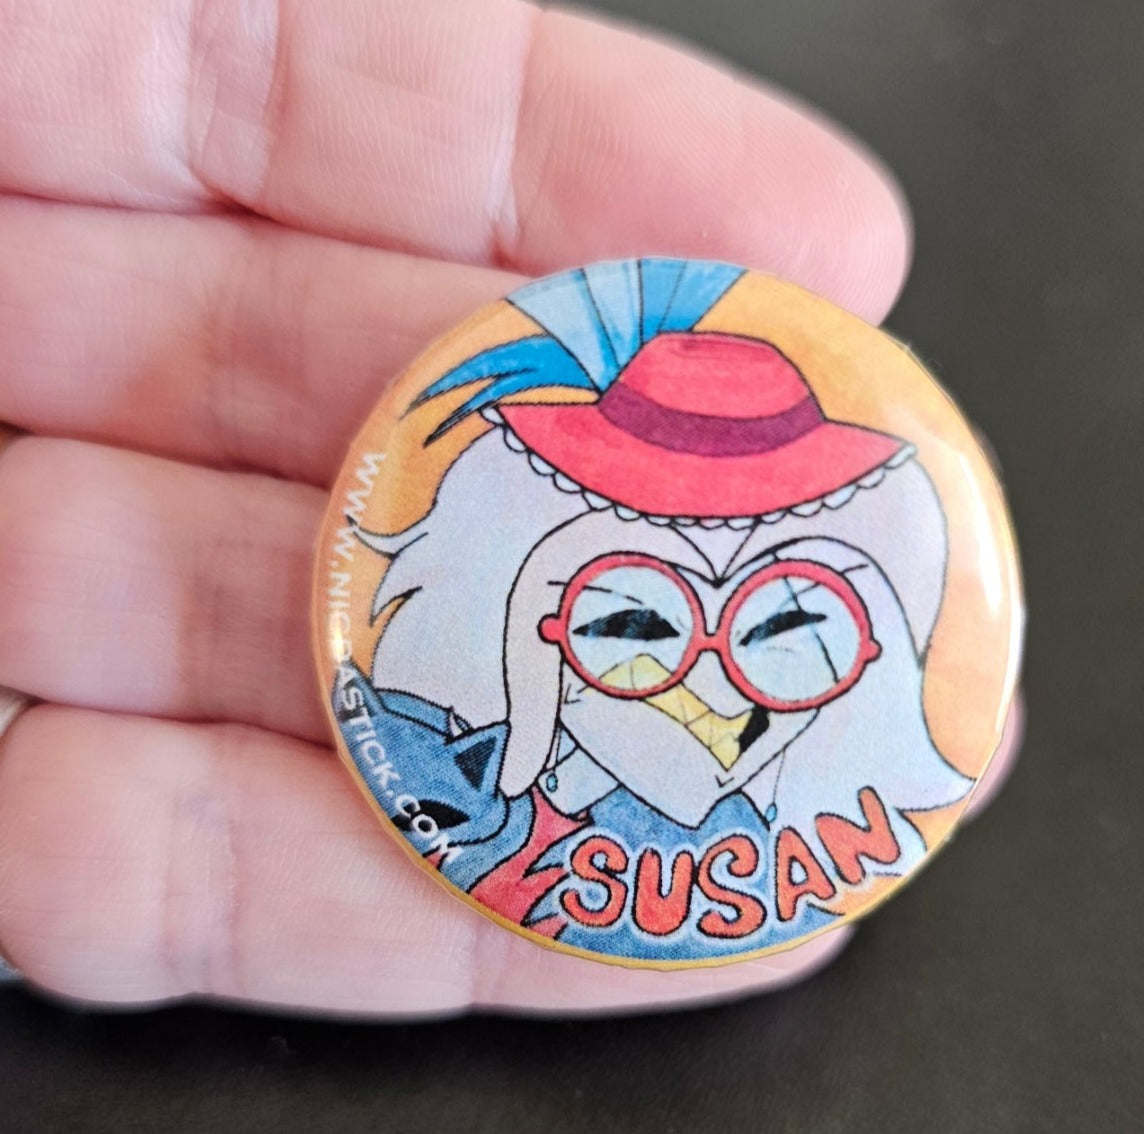 Susan - Button Pin